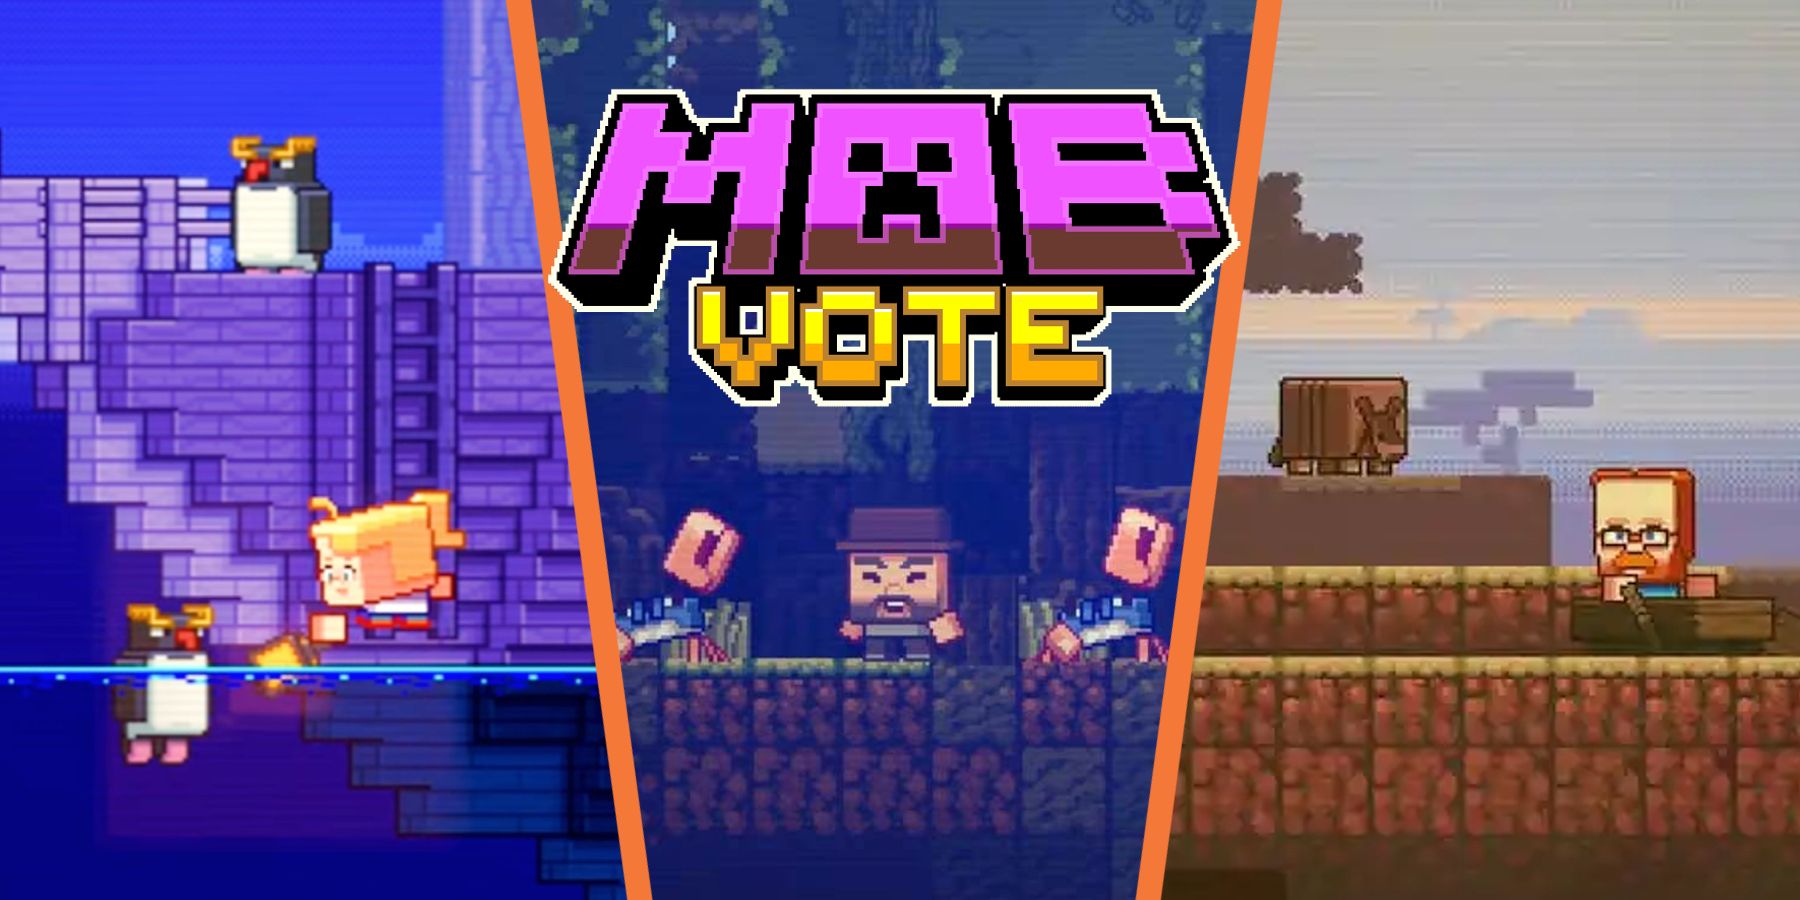 2023 Minecraft Mob Vote Revolution / End the Mob Vote